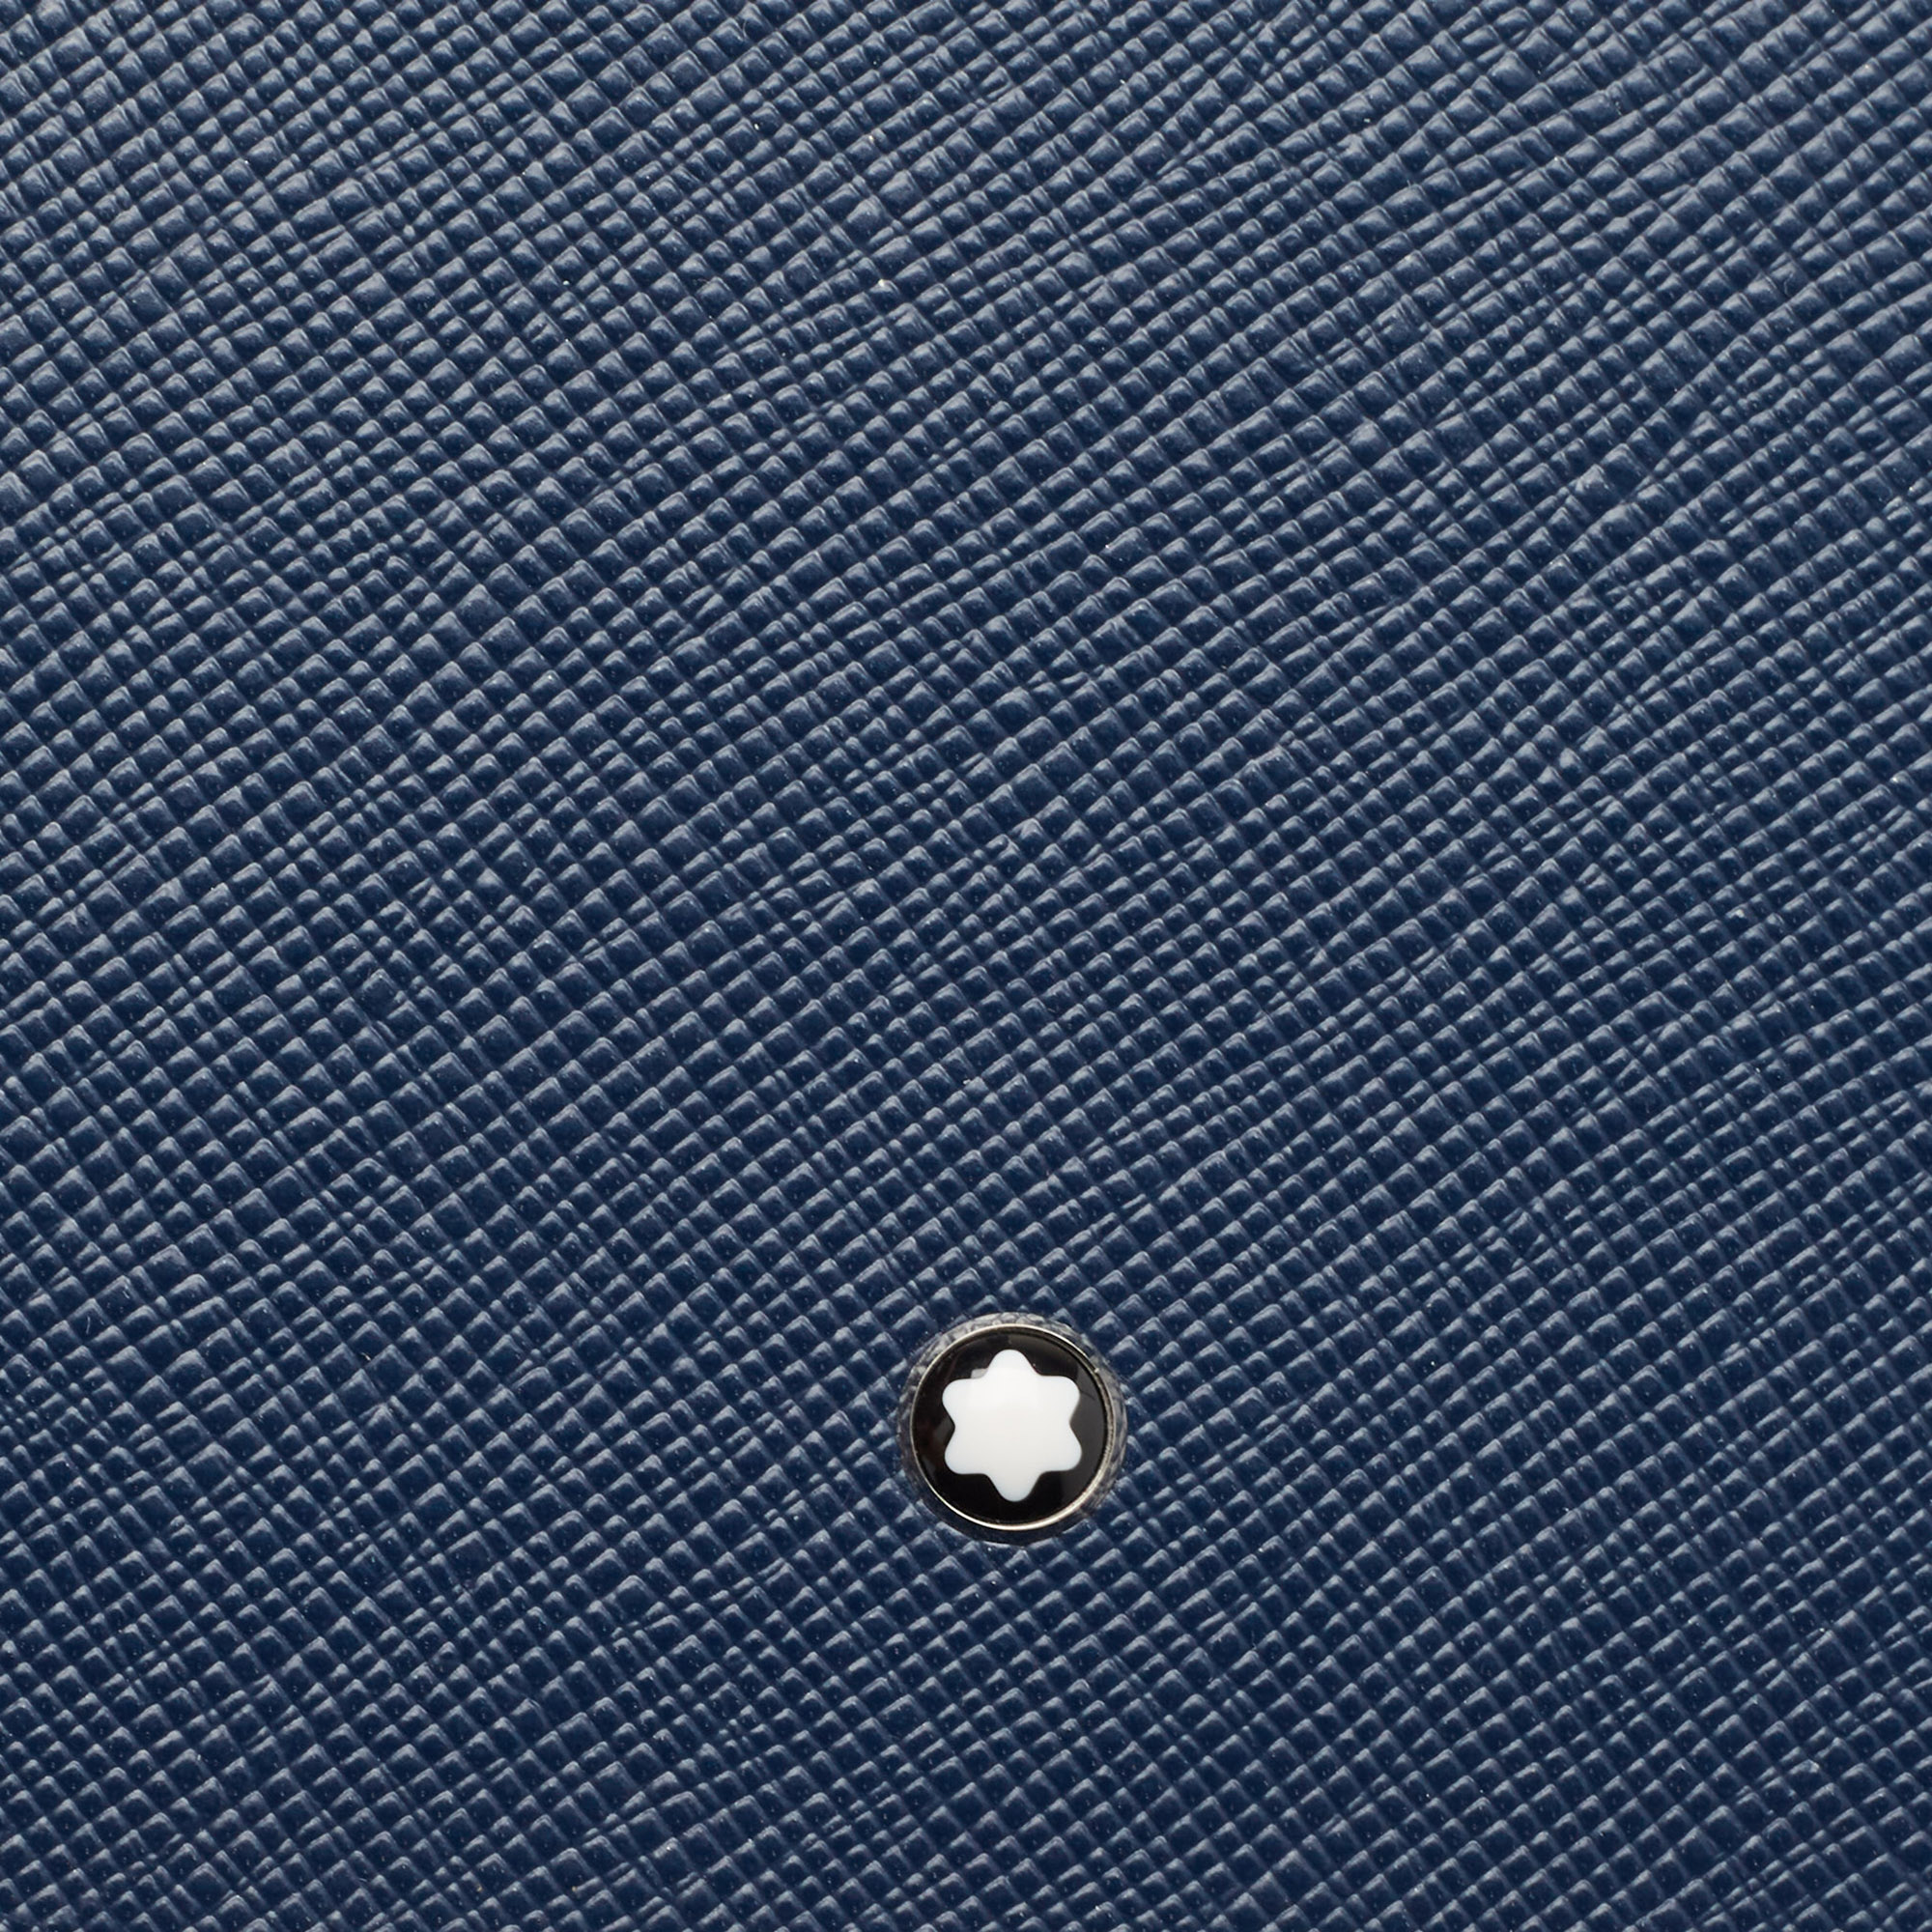 Montblanc Navy Blue Leather Fine Stationery Notebook